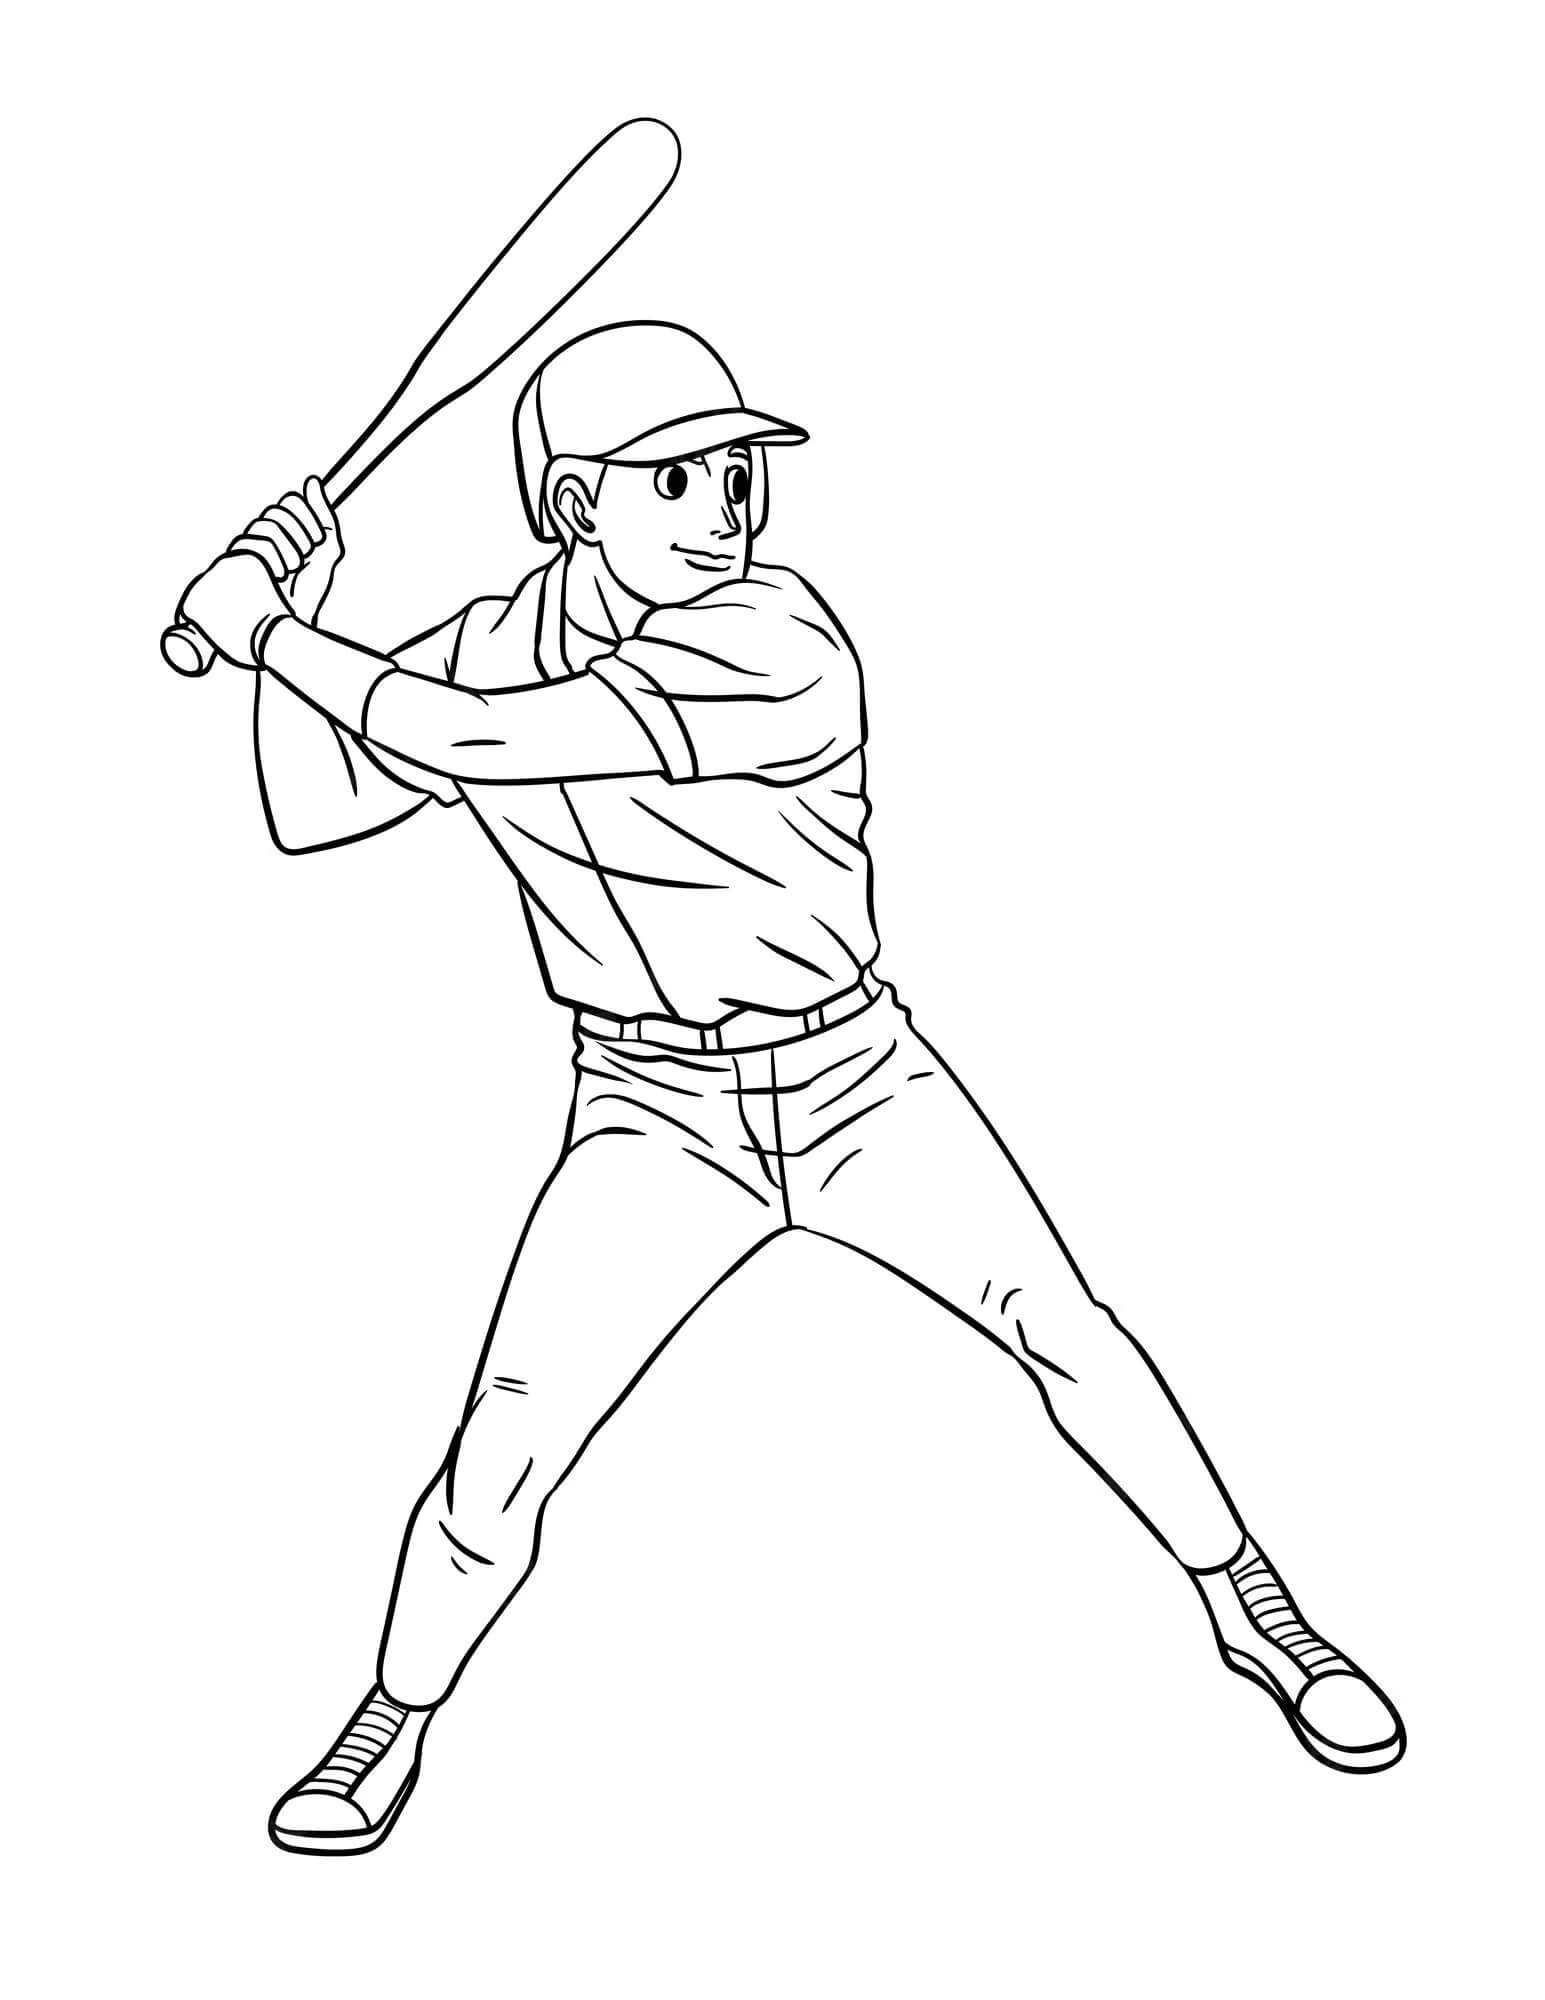 Dibujos de Jugador De Béisbol Guapo para colorear